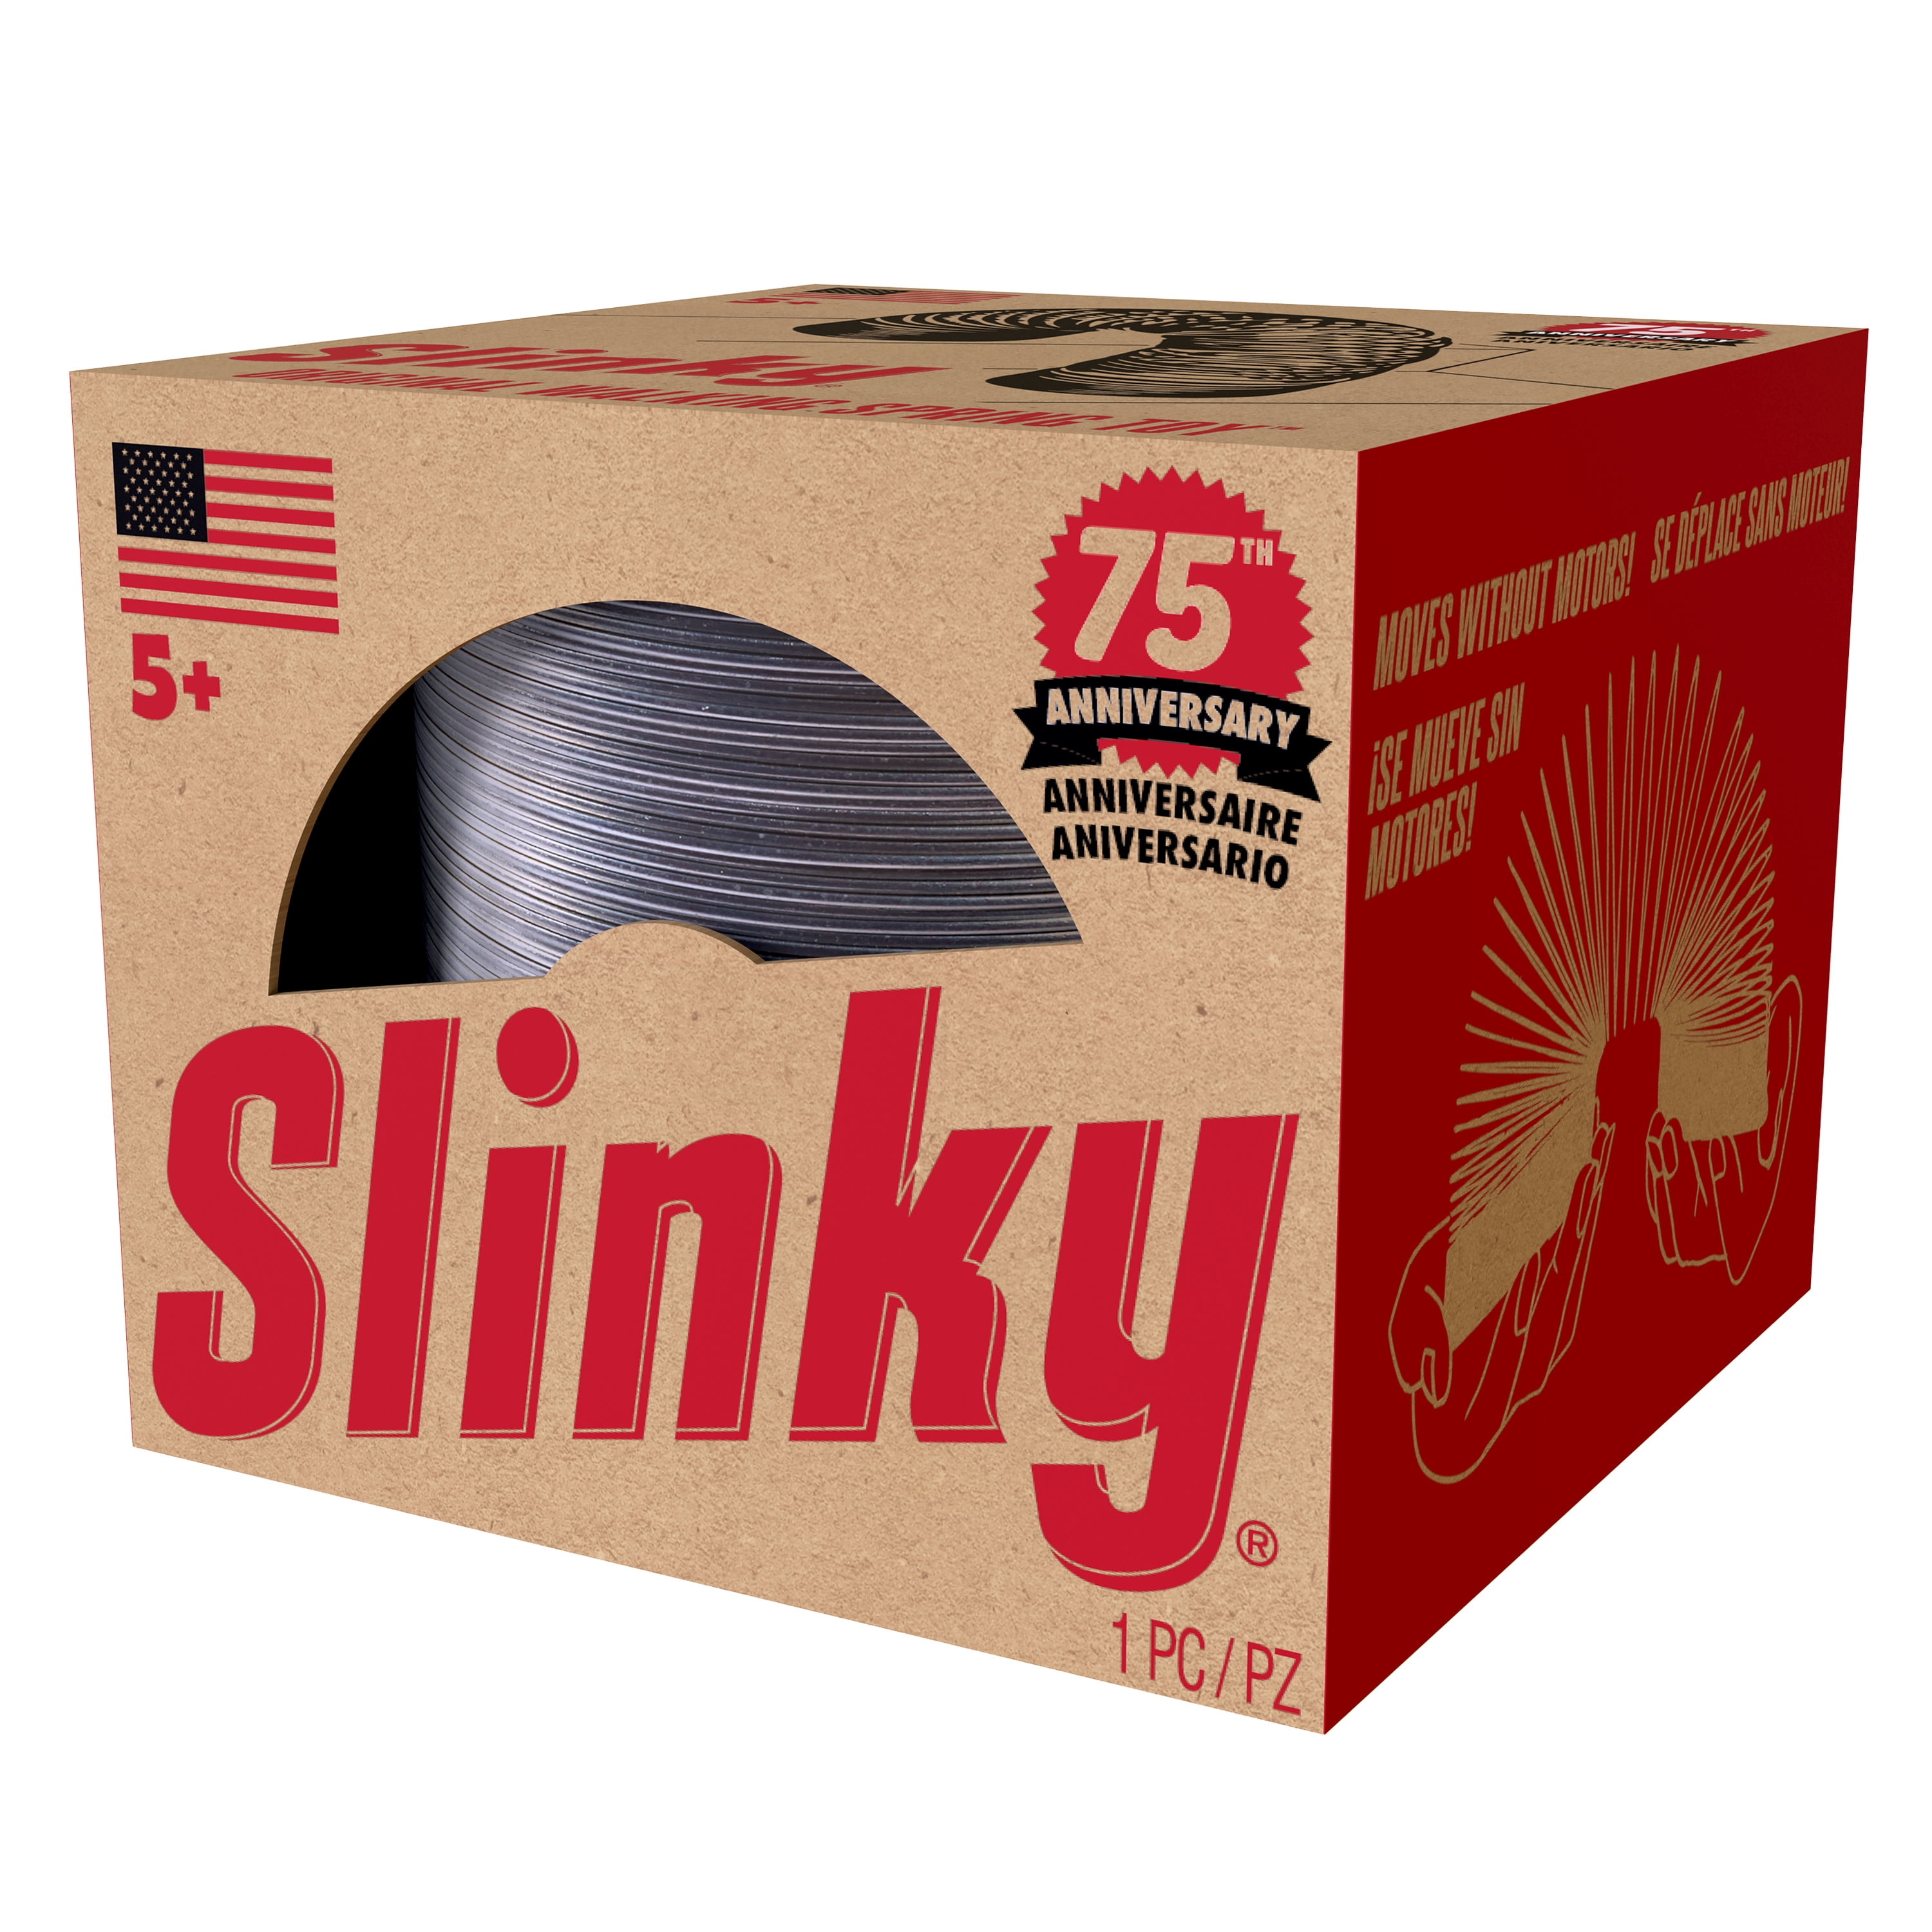 Original Slinky Metal Walking Spring Toy in Collectible Retro Black/Brown Box 